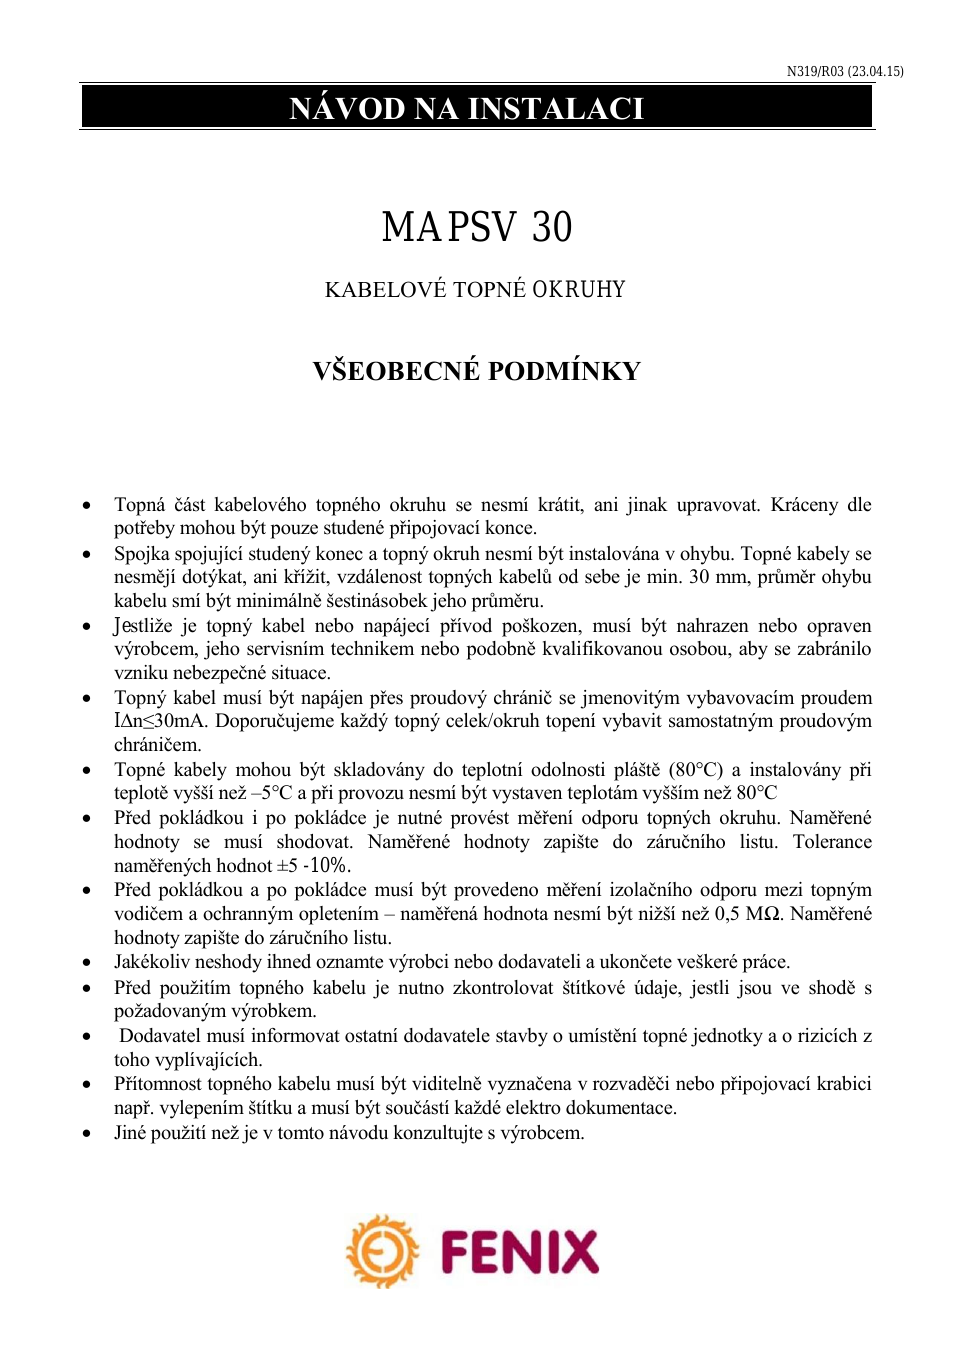 MAPSV 30